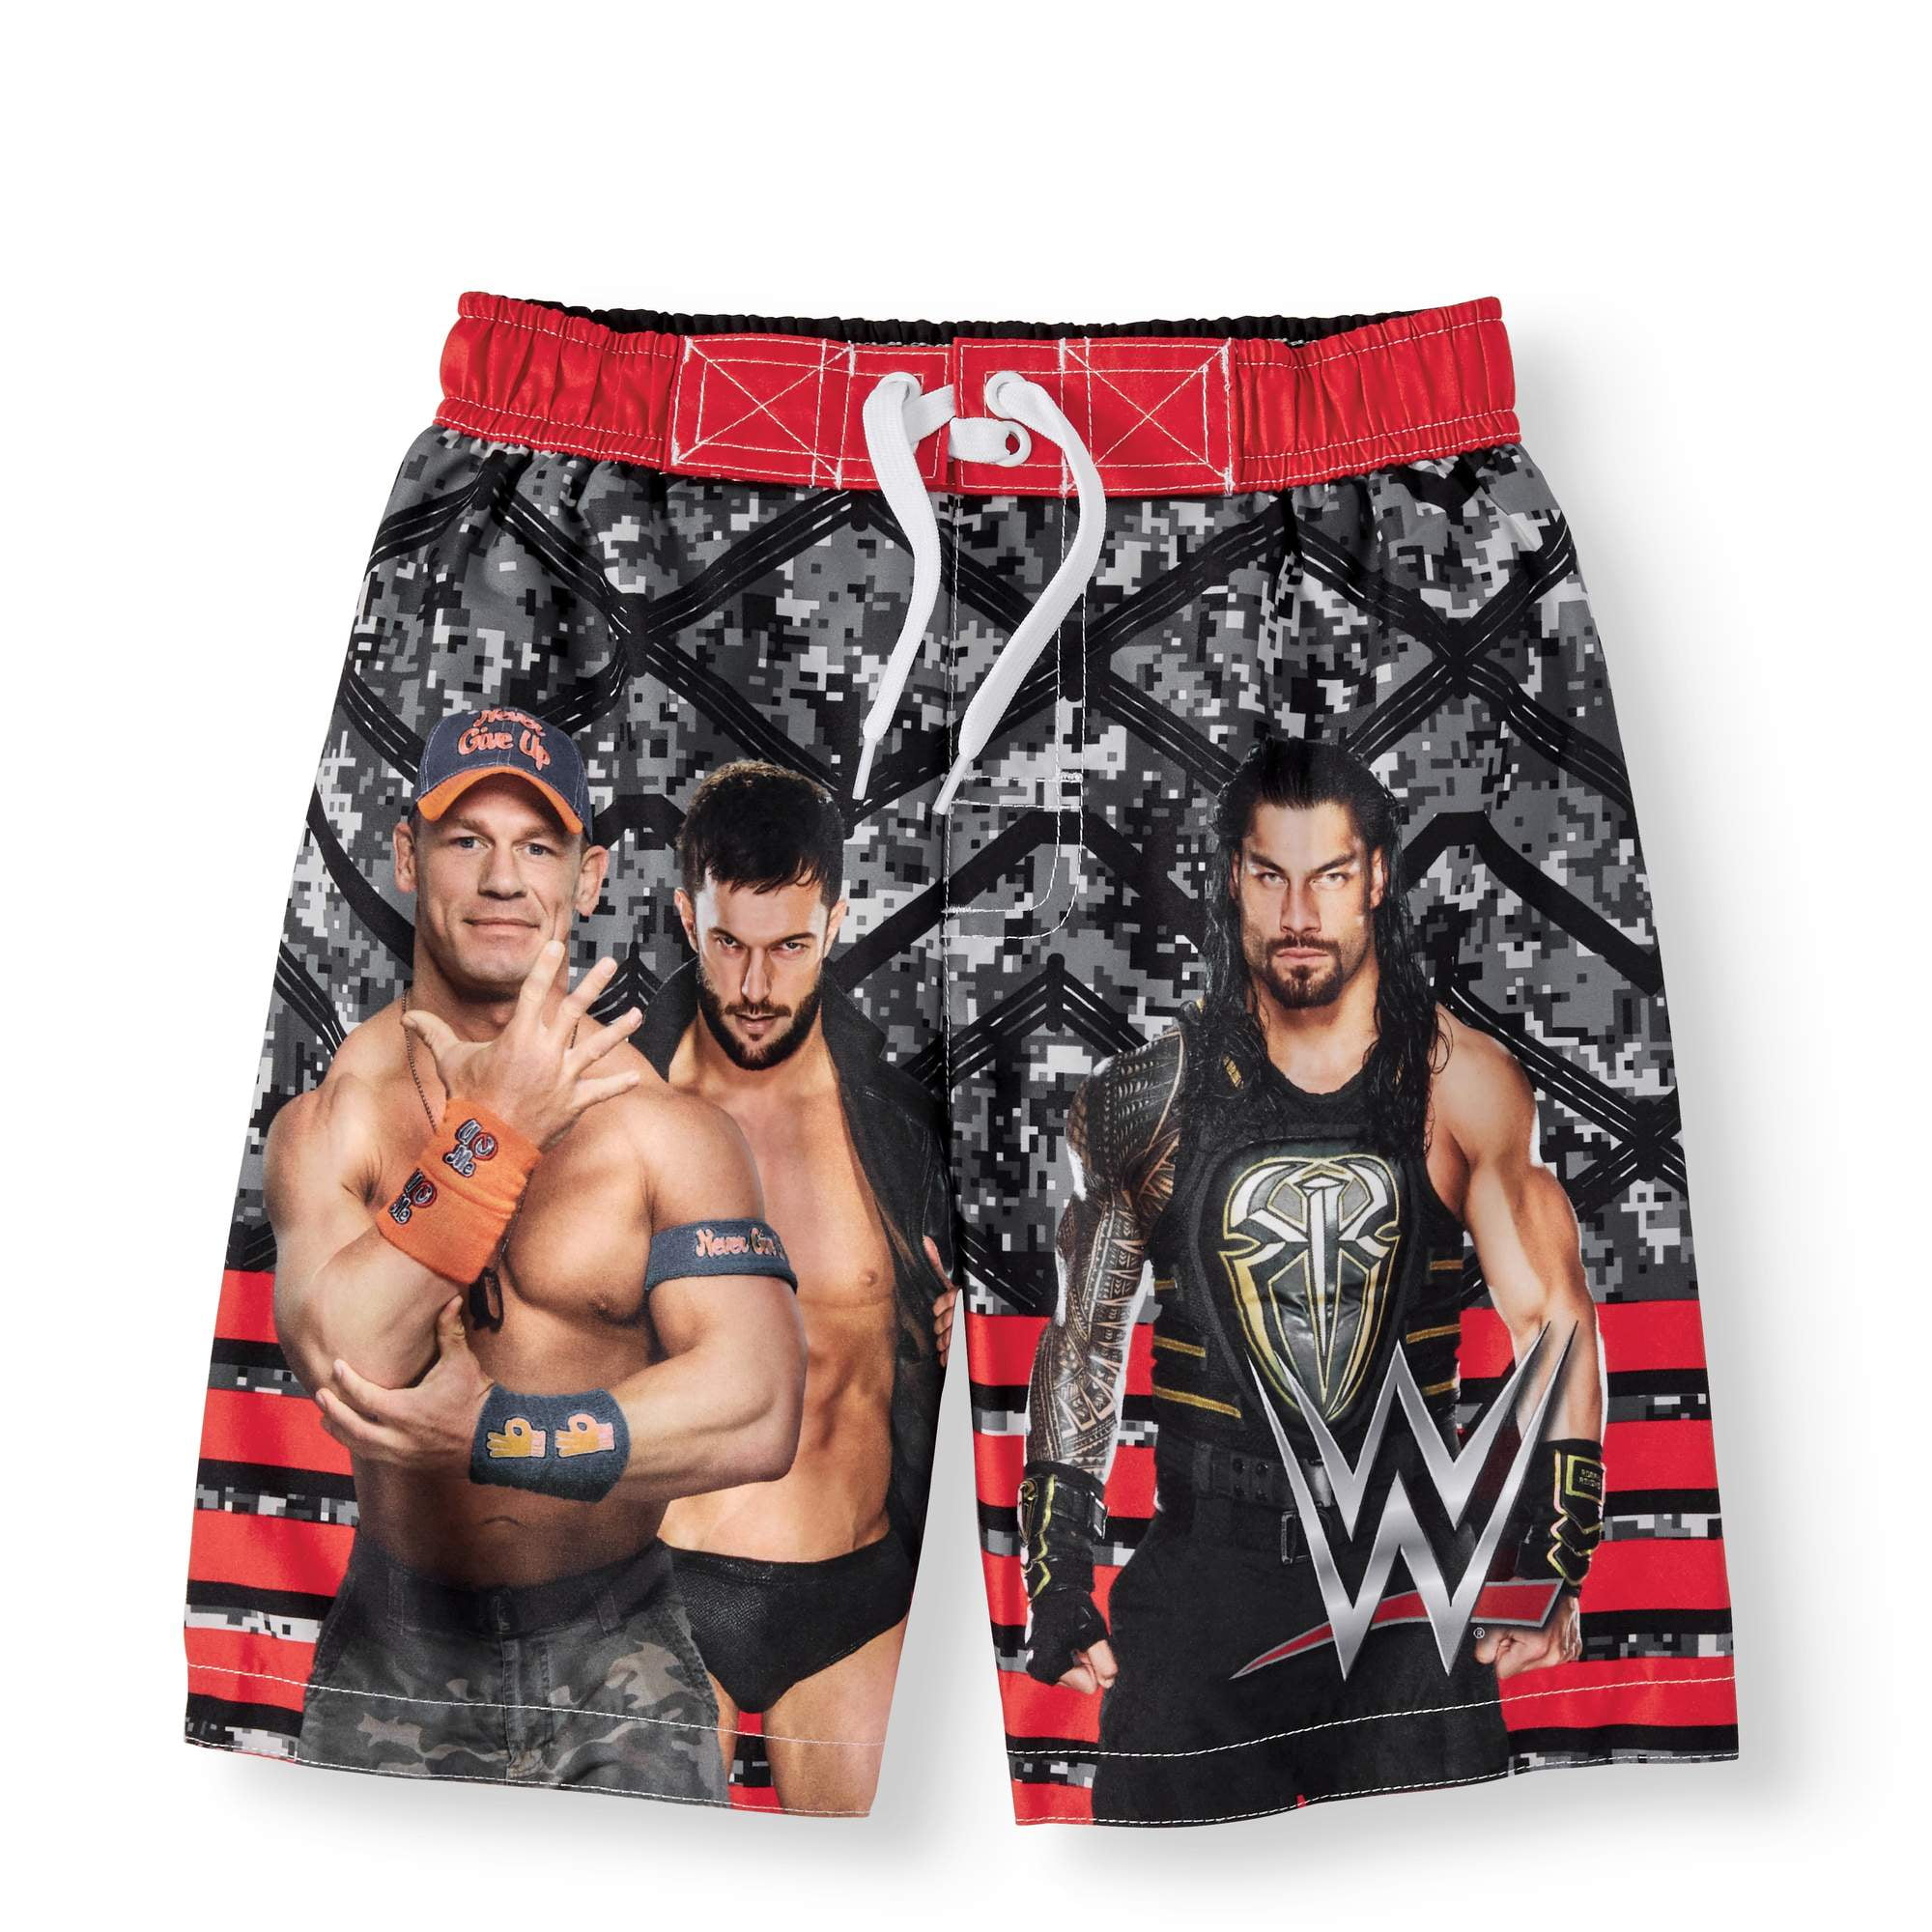 Size XL 14/16 NEW WWE Wrestling Boys' Swim Trunks Board Shorts Quick Dry UPF 50 